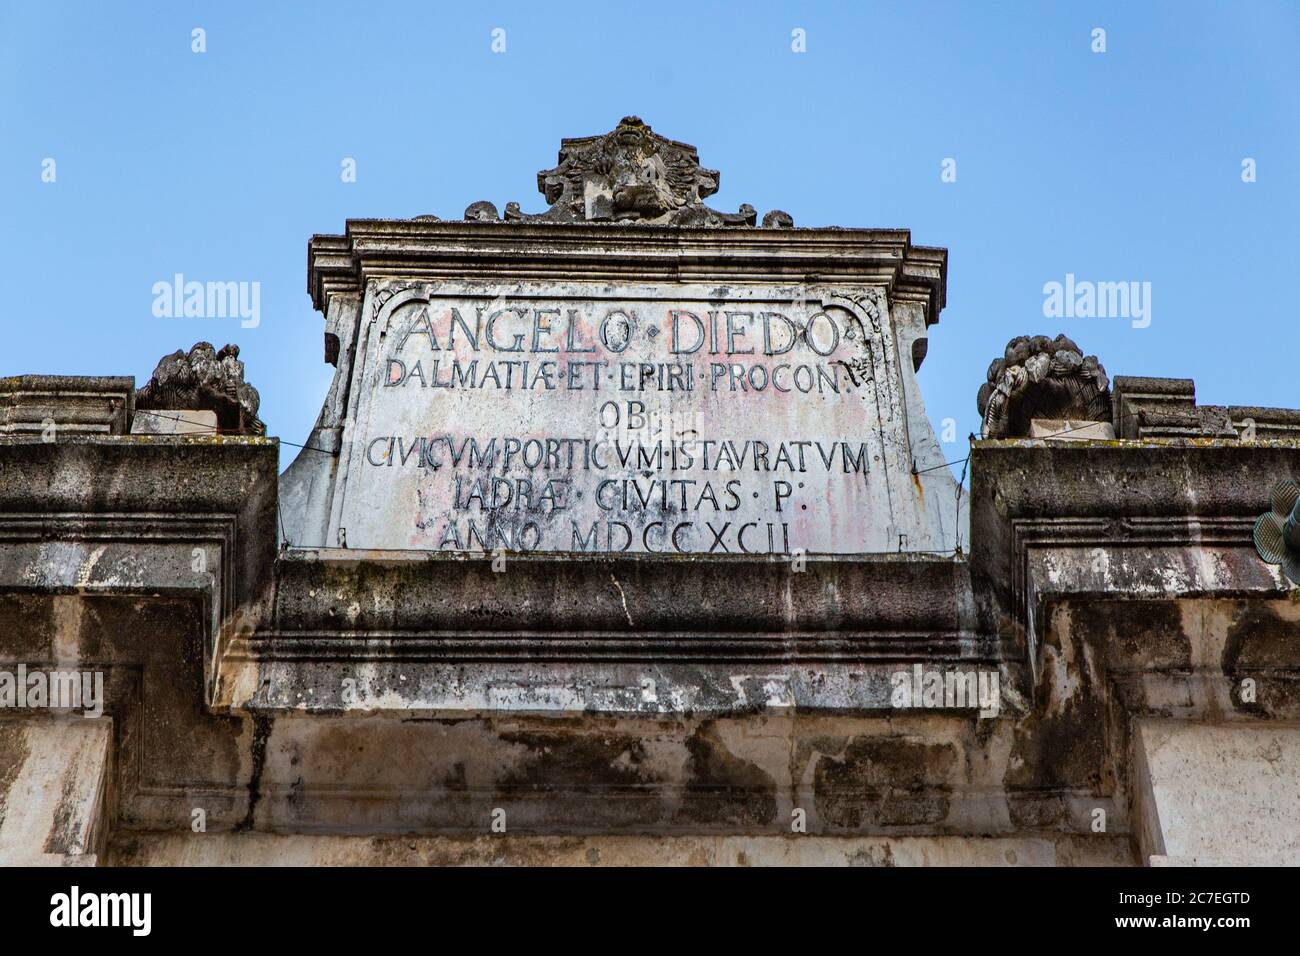 Date stone on top of the City Lodge (Gradska Loza) bearing the name Angelo Diedo.  People's Square, Zadar, Croatia Stock Photo